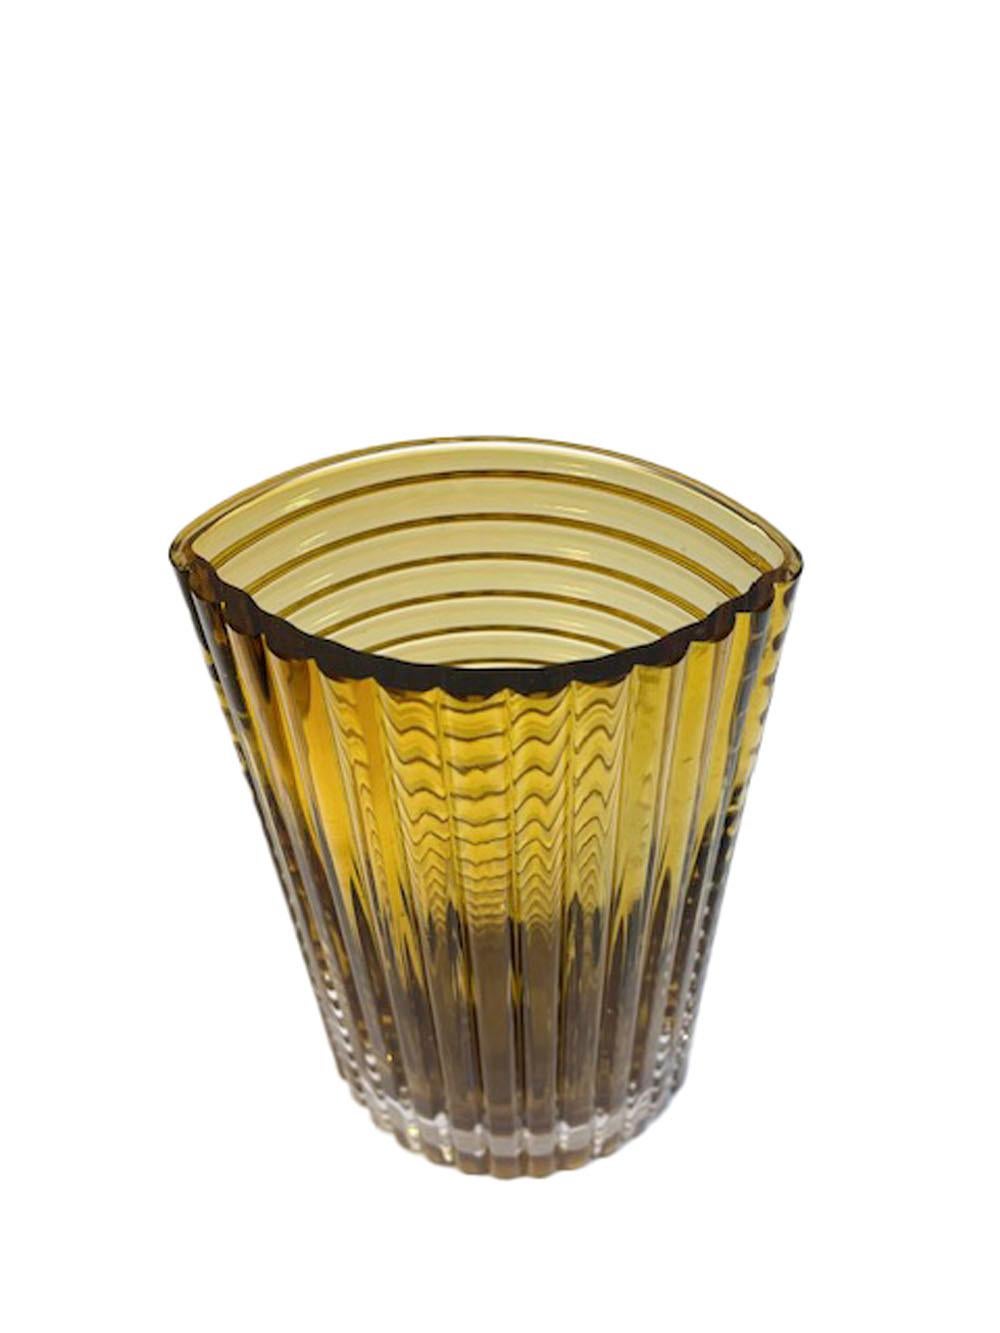 Vintage Clear Over Amber Lindshammar Vase of Elliptical Form In Good Condition For Sale In Nantucket, MA